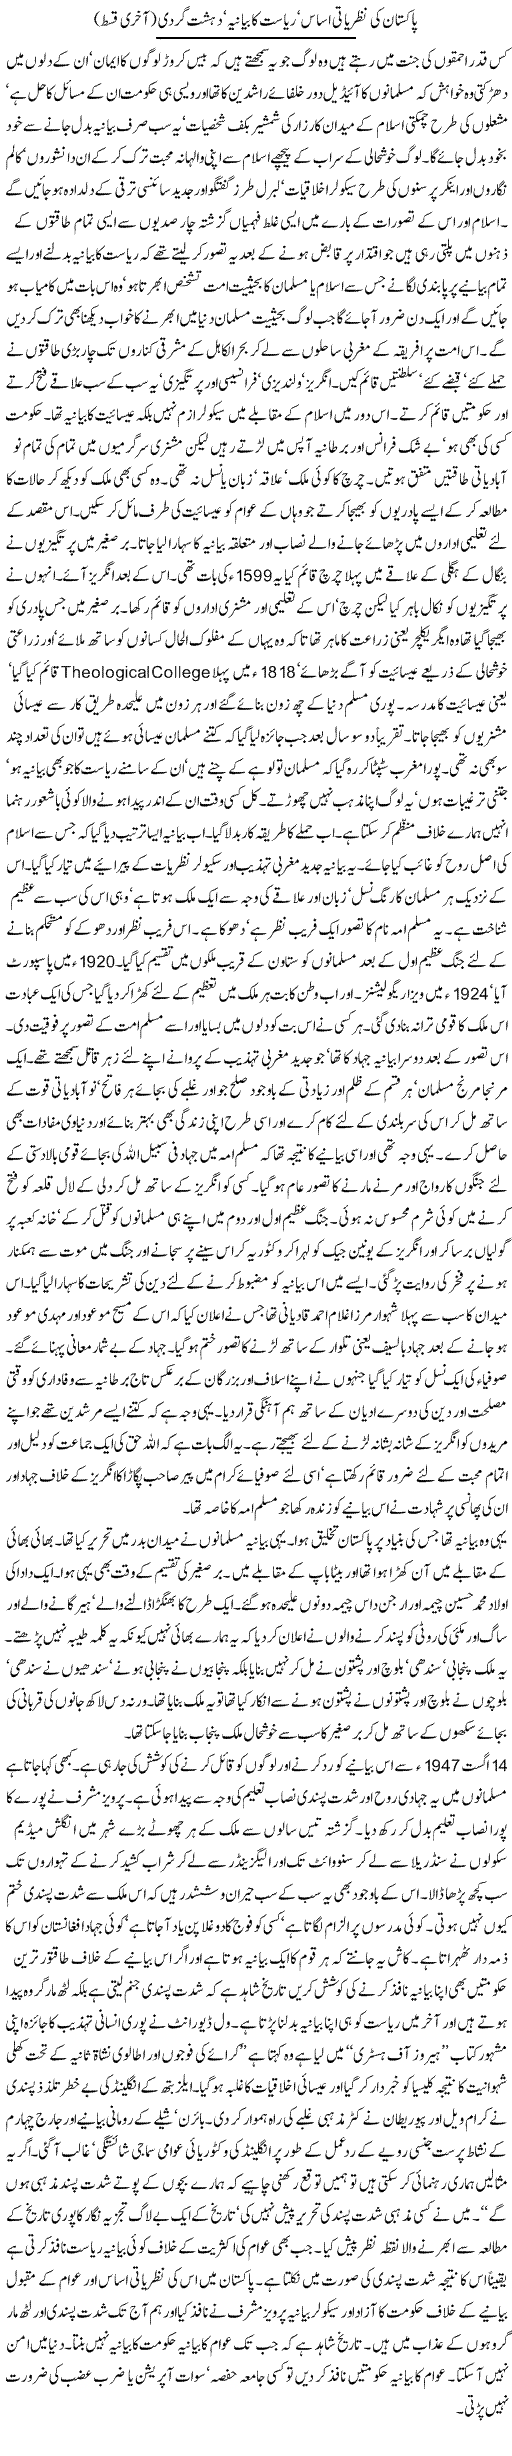 Pakistan ki nazriati asaas, riasat ka bayaniya, dehshat gardi (2) | Orya Maqbool Jan | Daily Urdu Columns